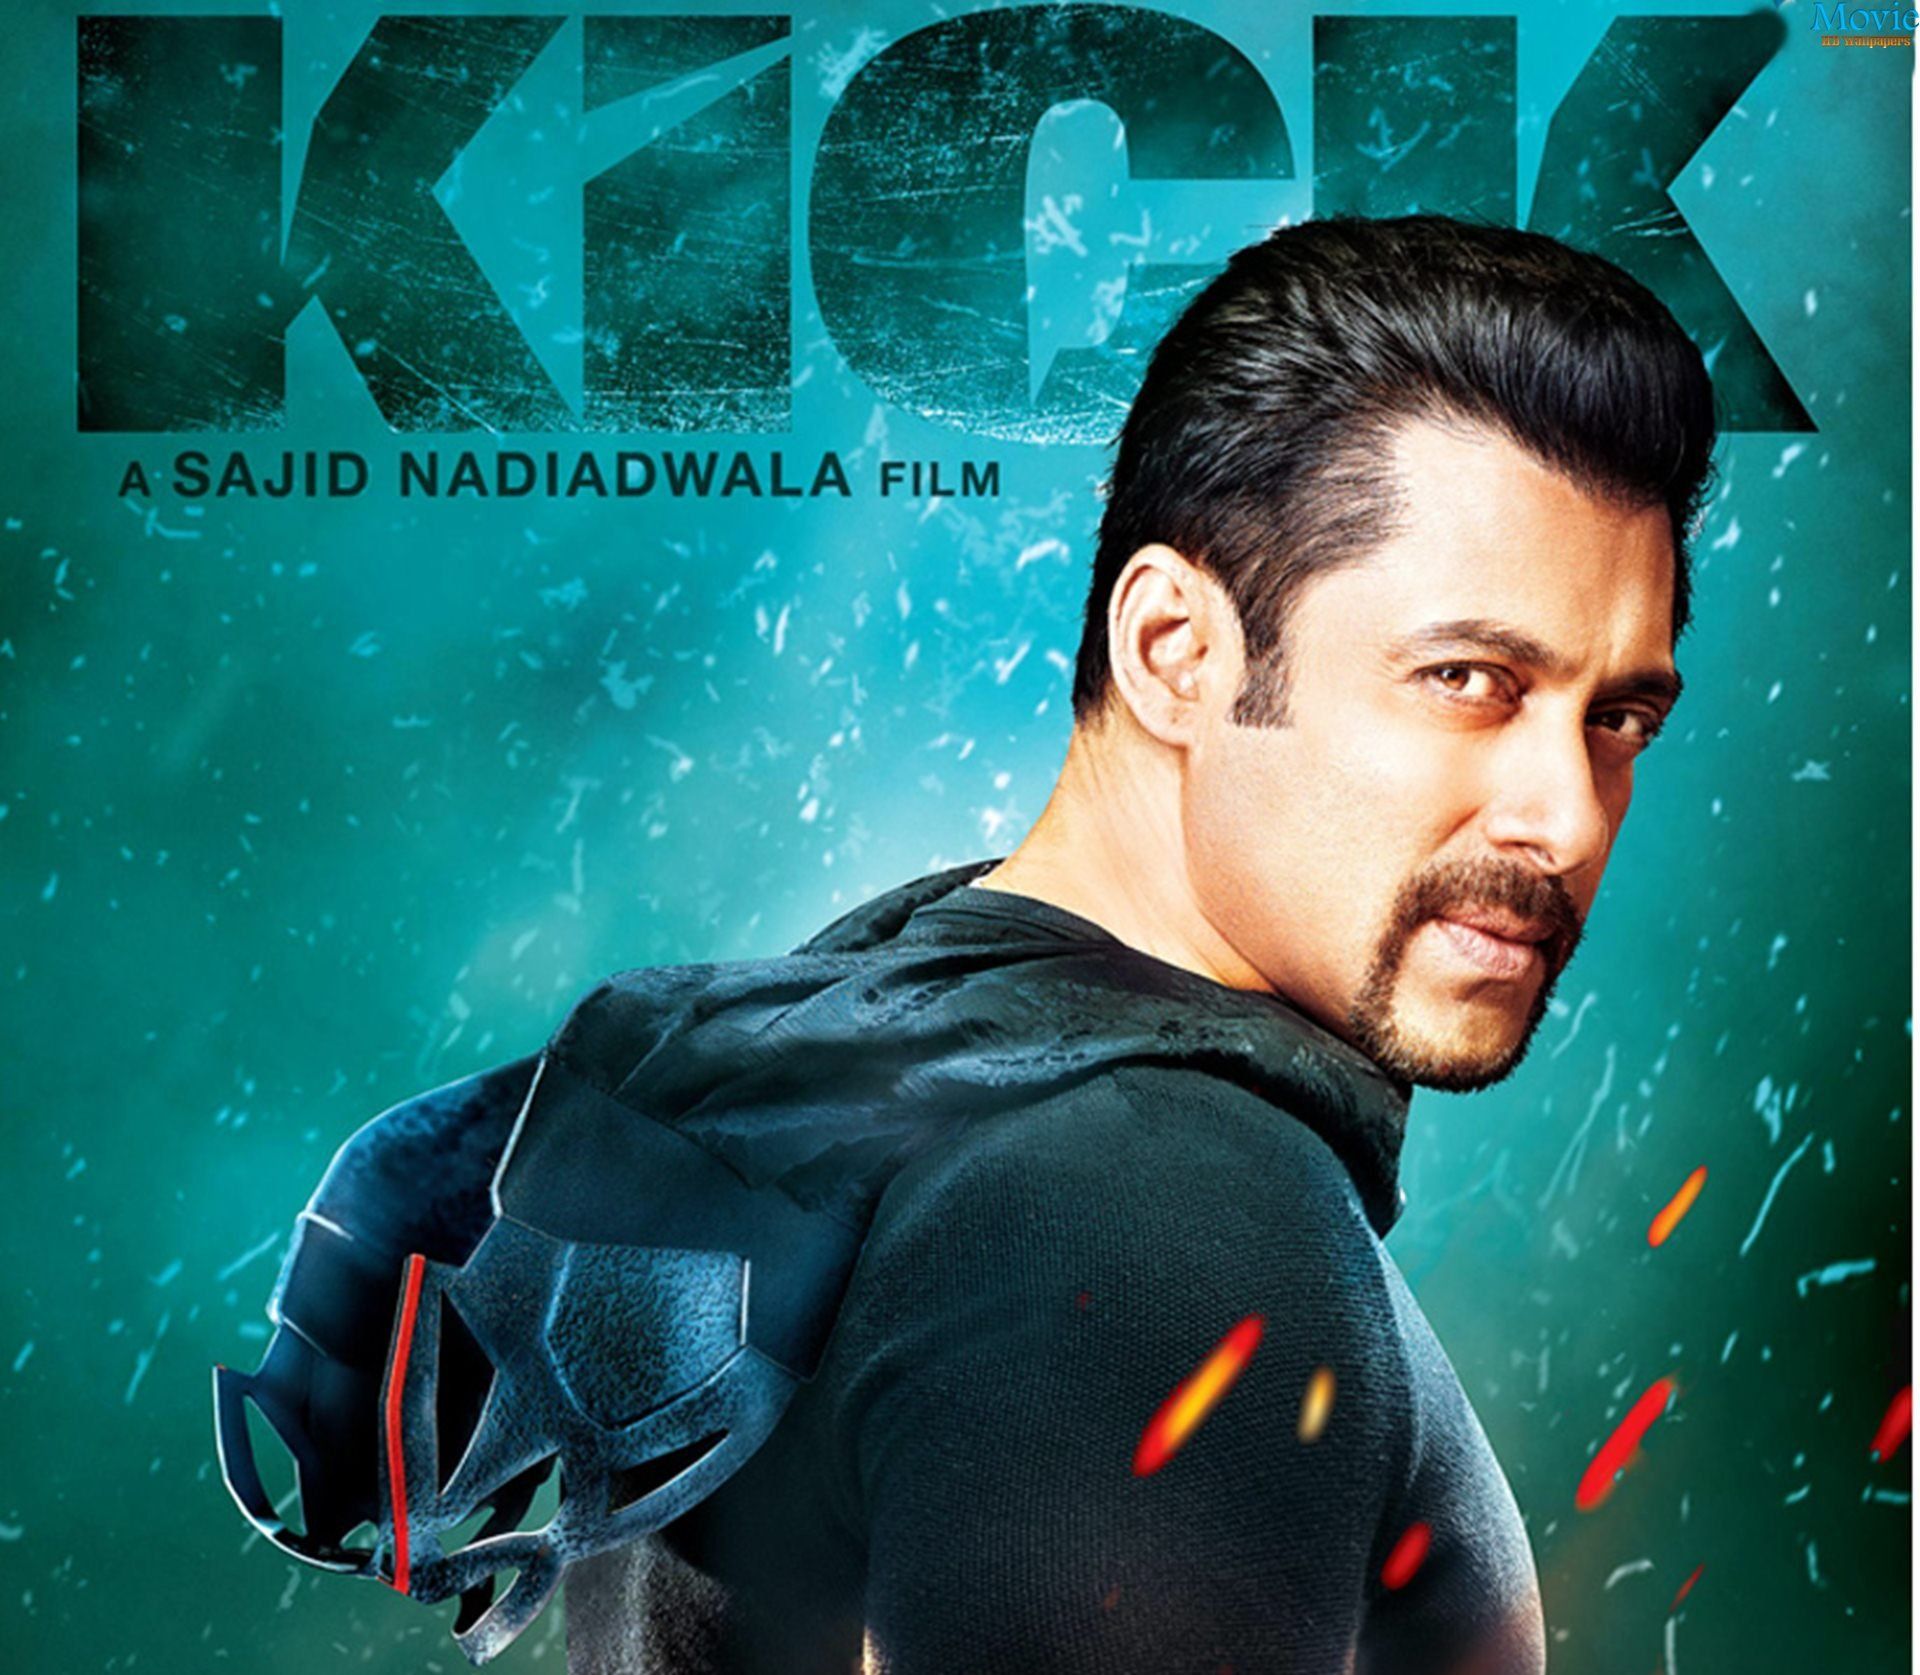 Salman Khan Kick Wallpapers - Wallpaper Cave